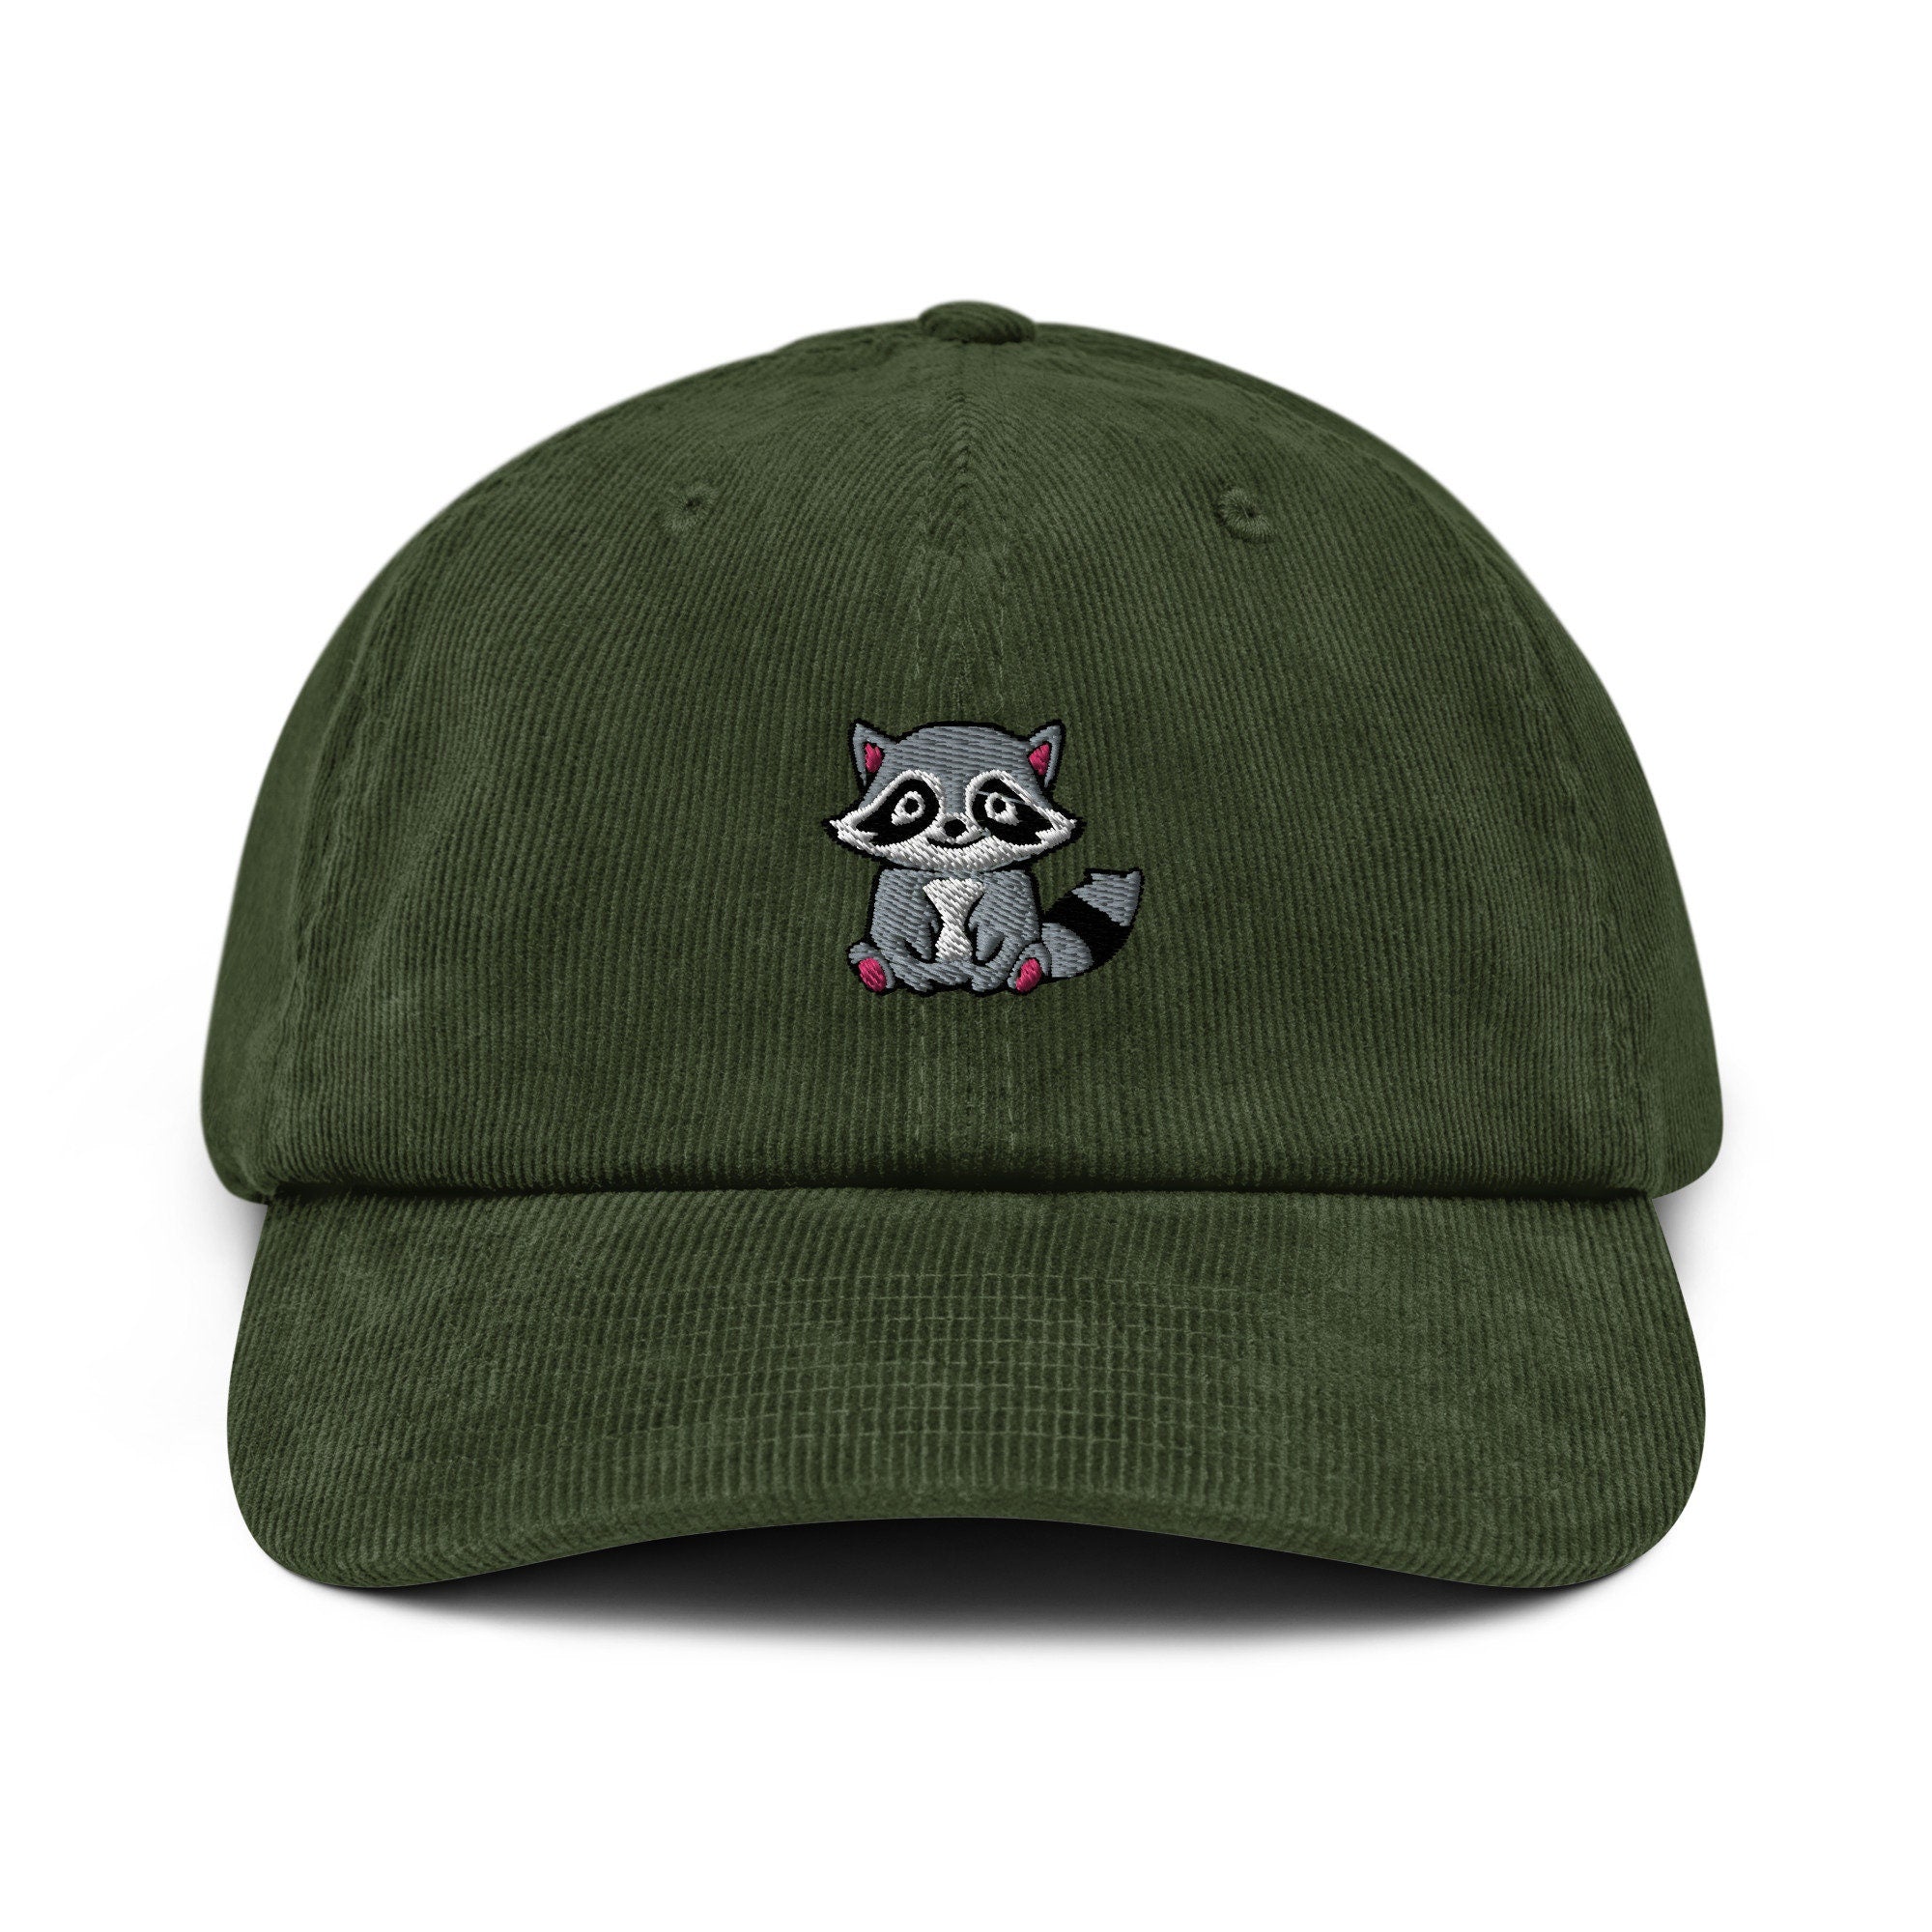 Raccoon Corduroy Hat, Handmade Embroidered Corduroy Dad Cap - Multiple Colors